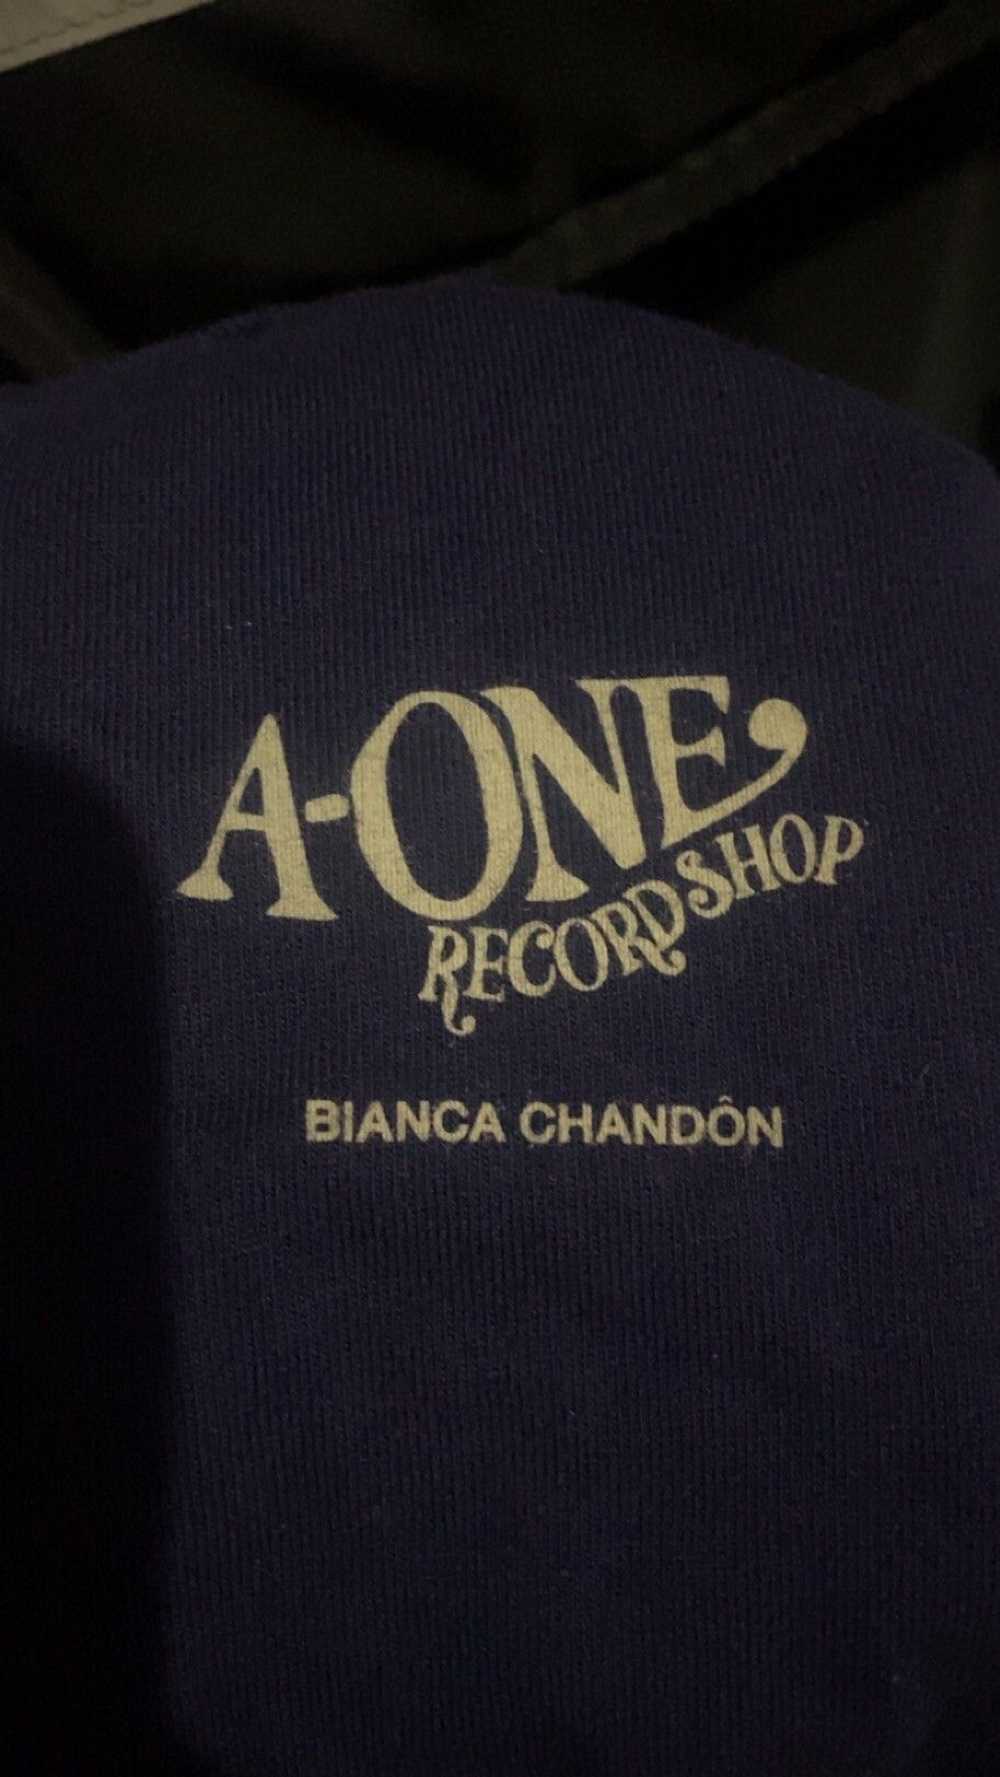 Bianca Chandon bianca chandon shirt - image 4